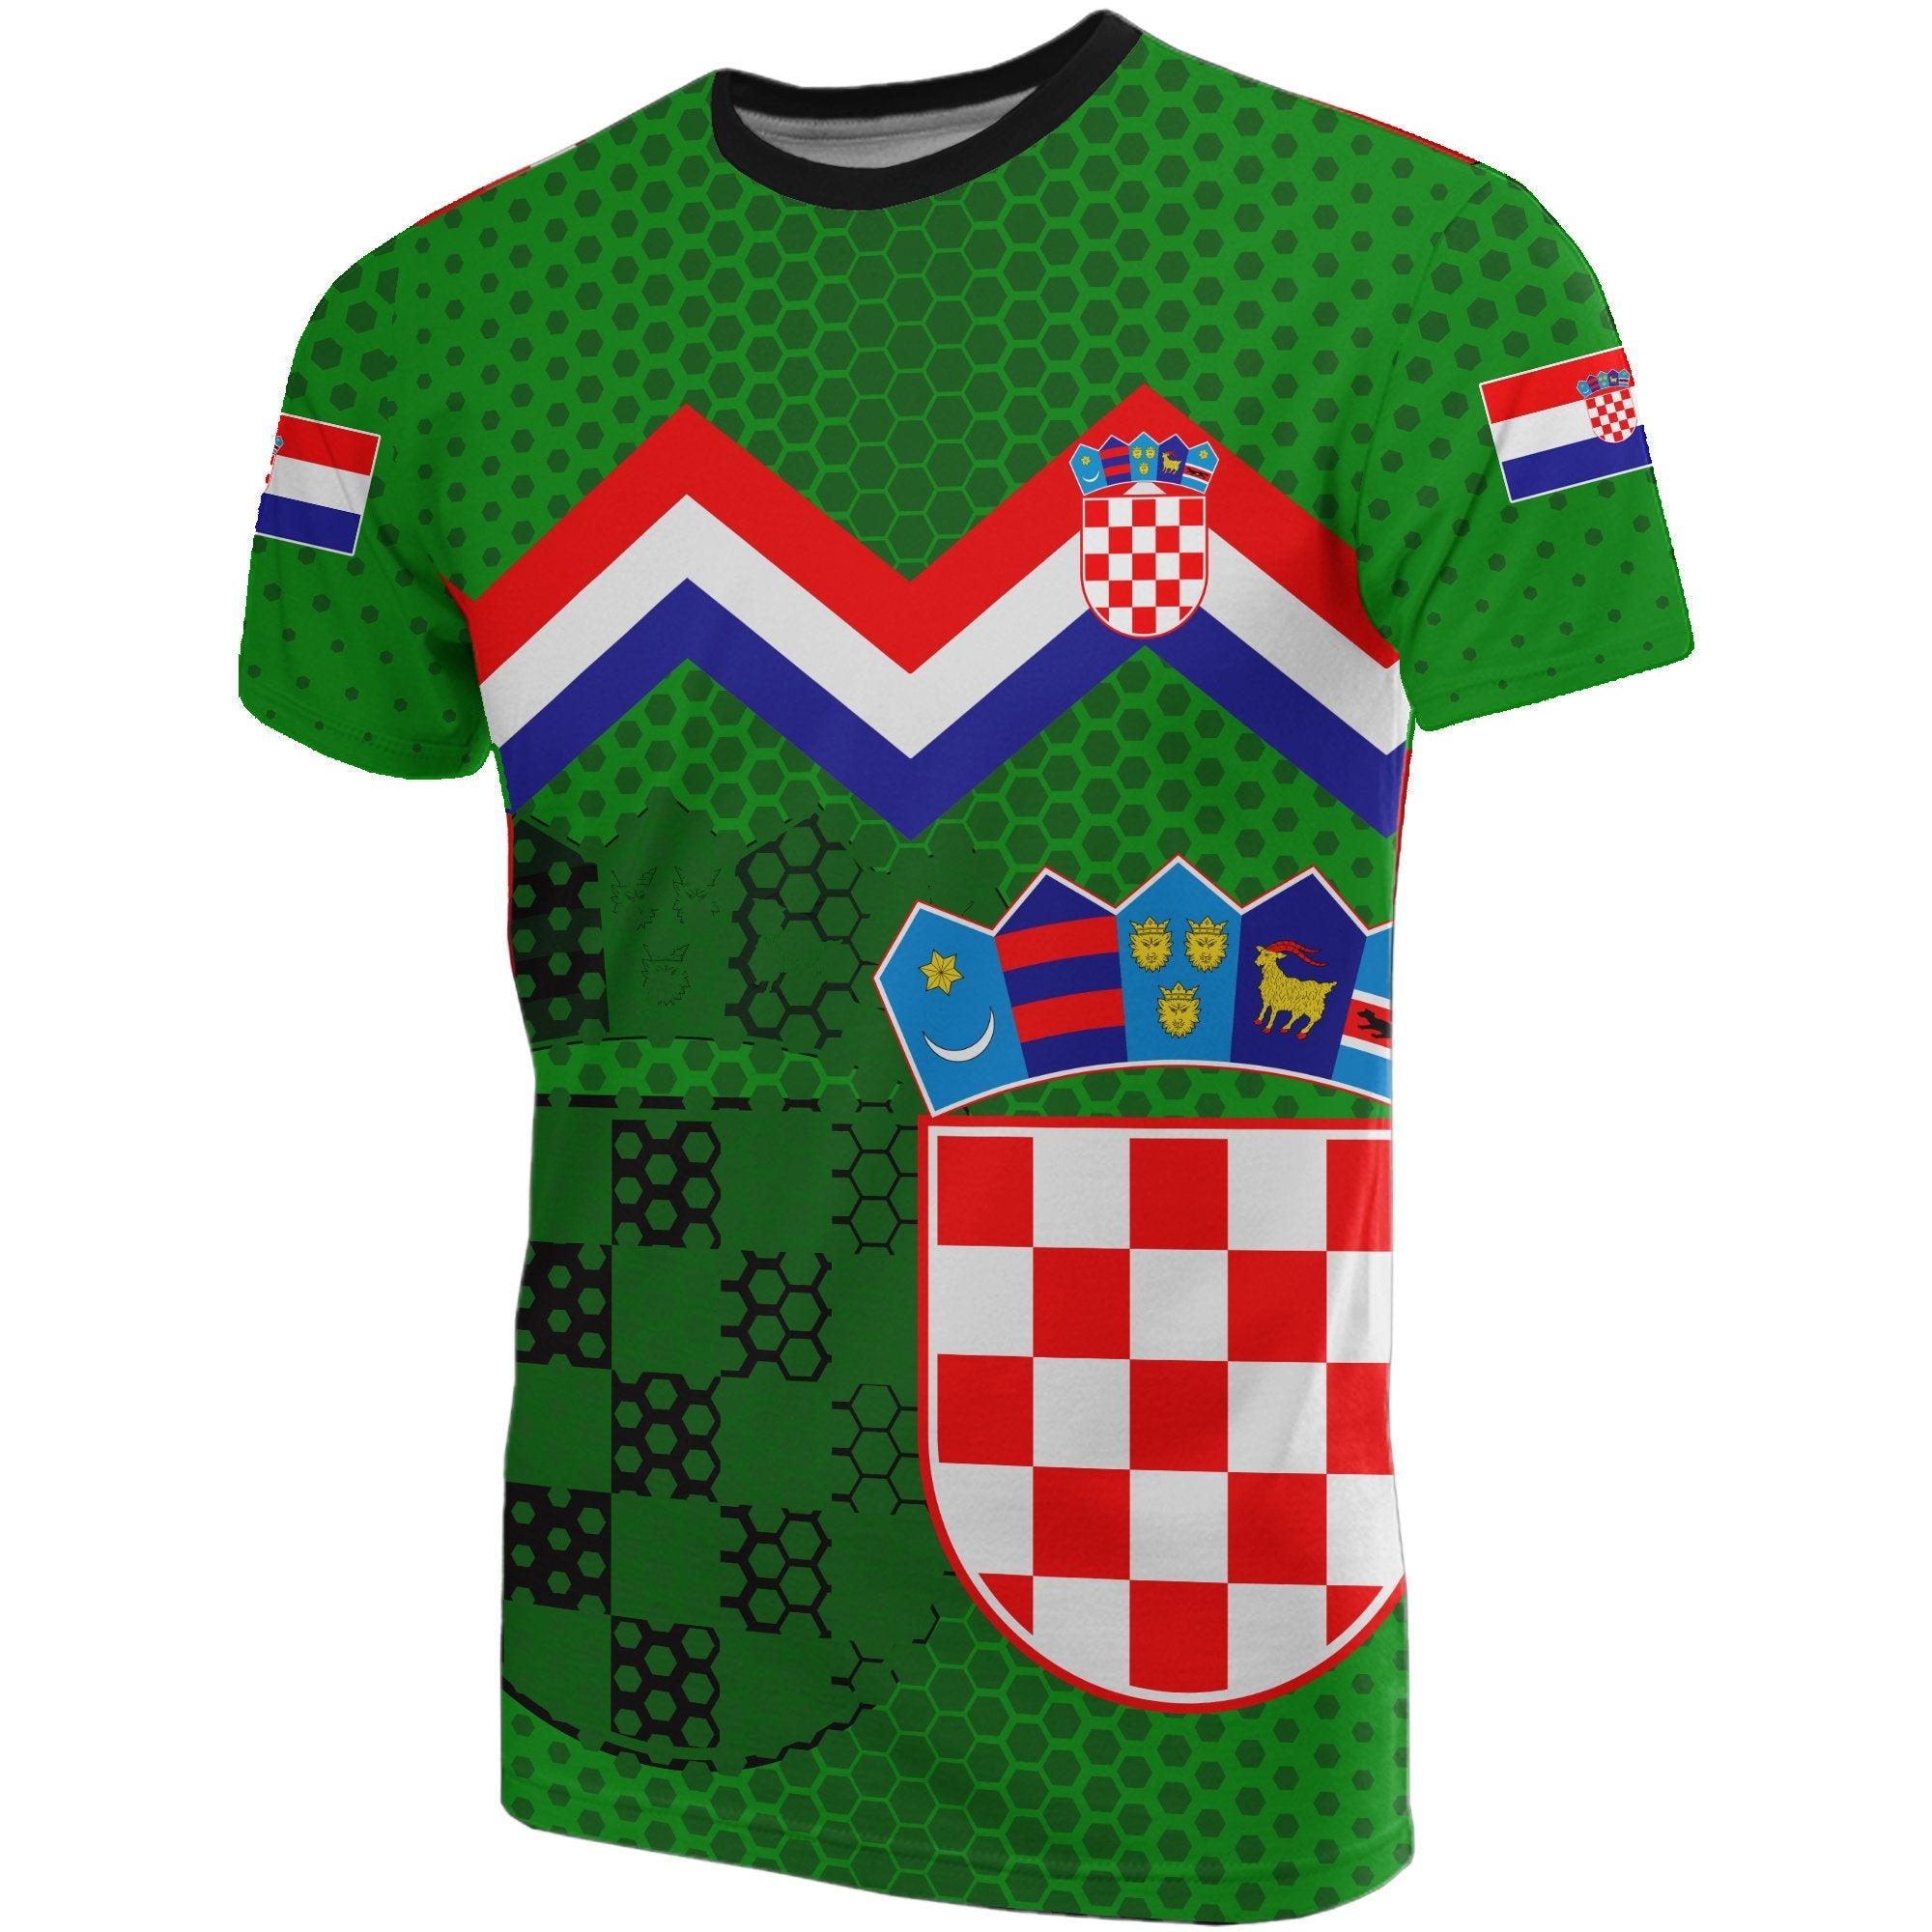 hrvatska-croatia-coat-of-arms-t-shirt-green